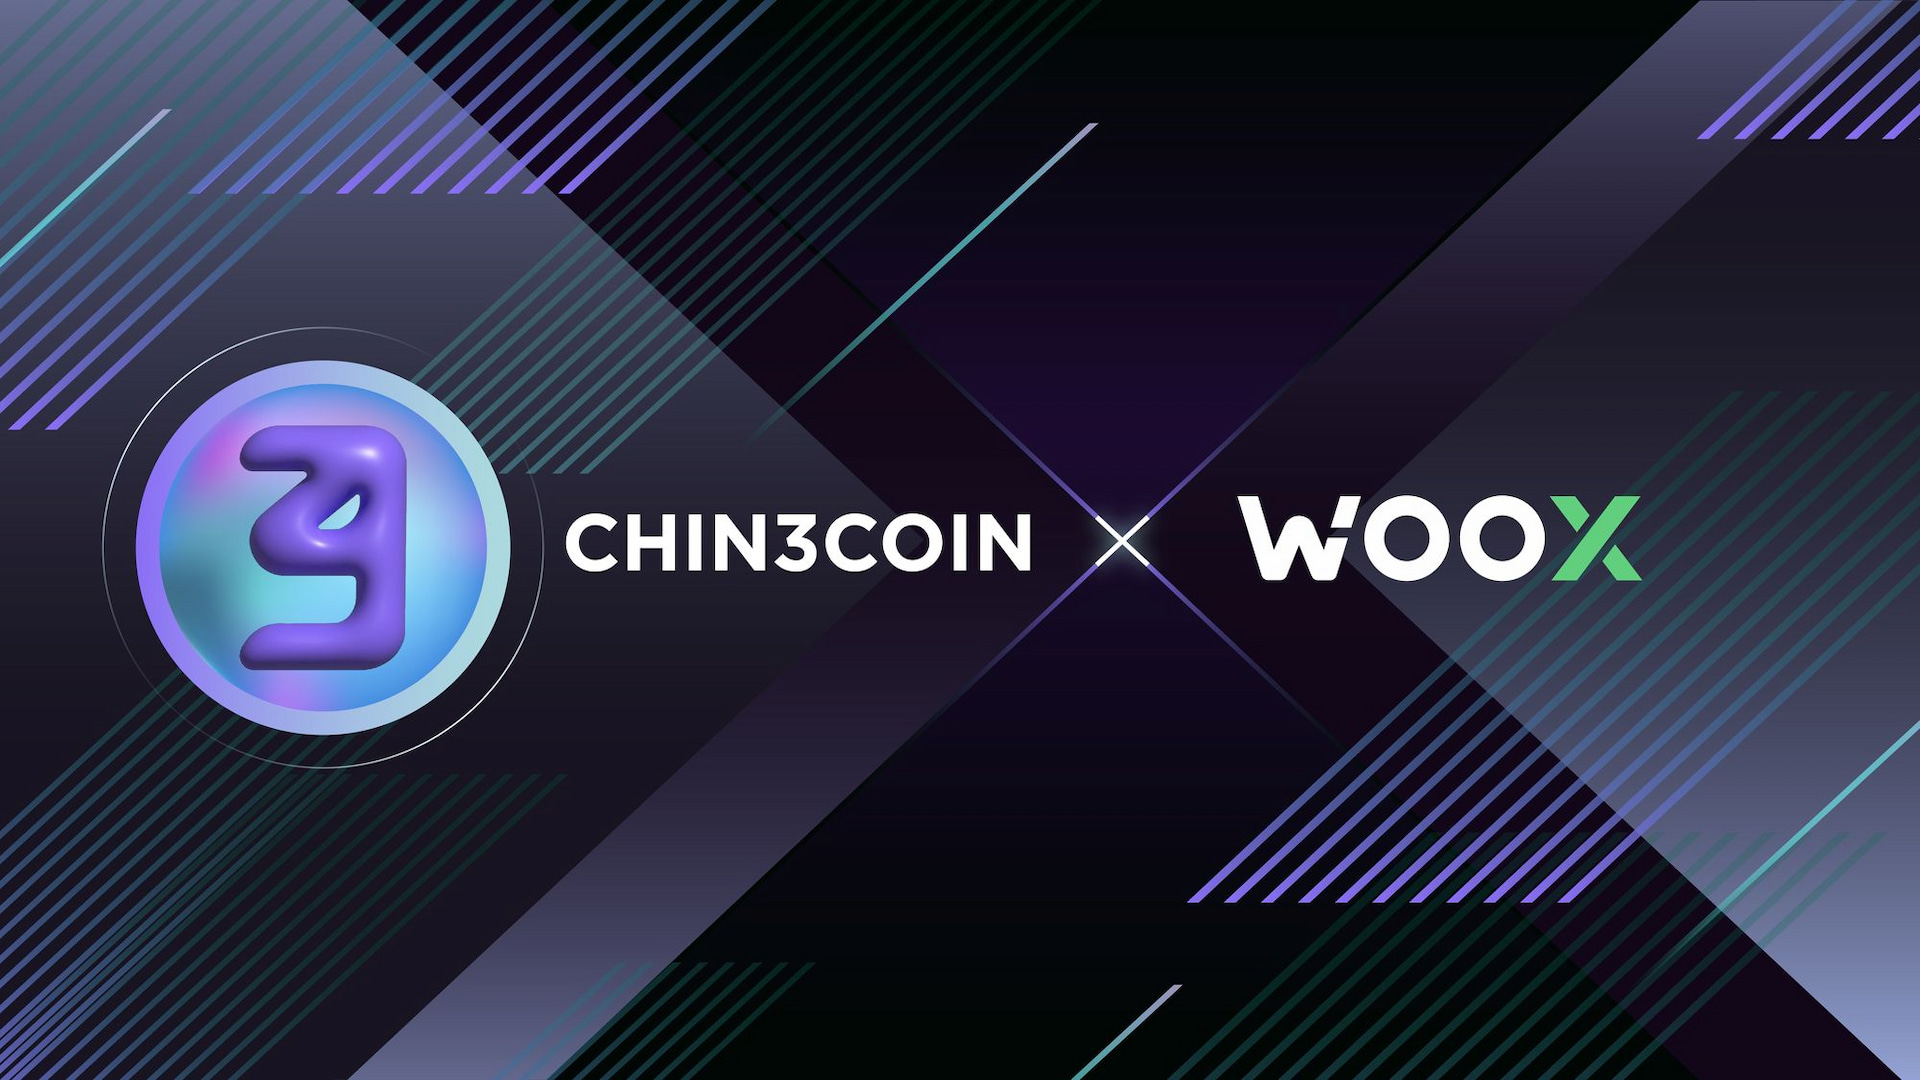 Торговый конкурс CHIN3COIN на WOO Х. $5,000 ждут победителей!